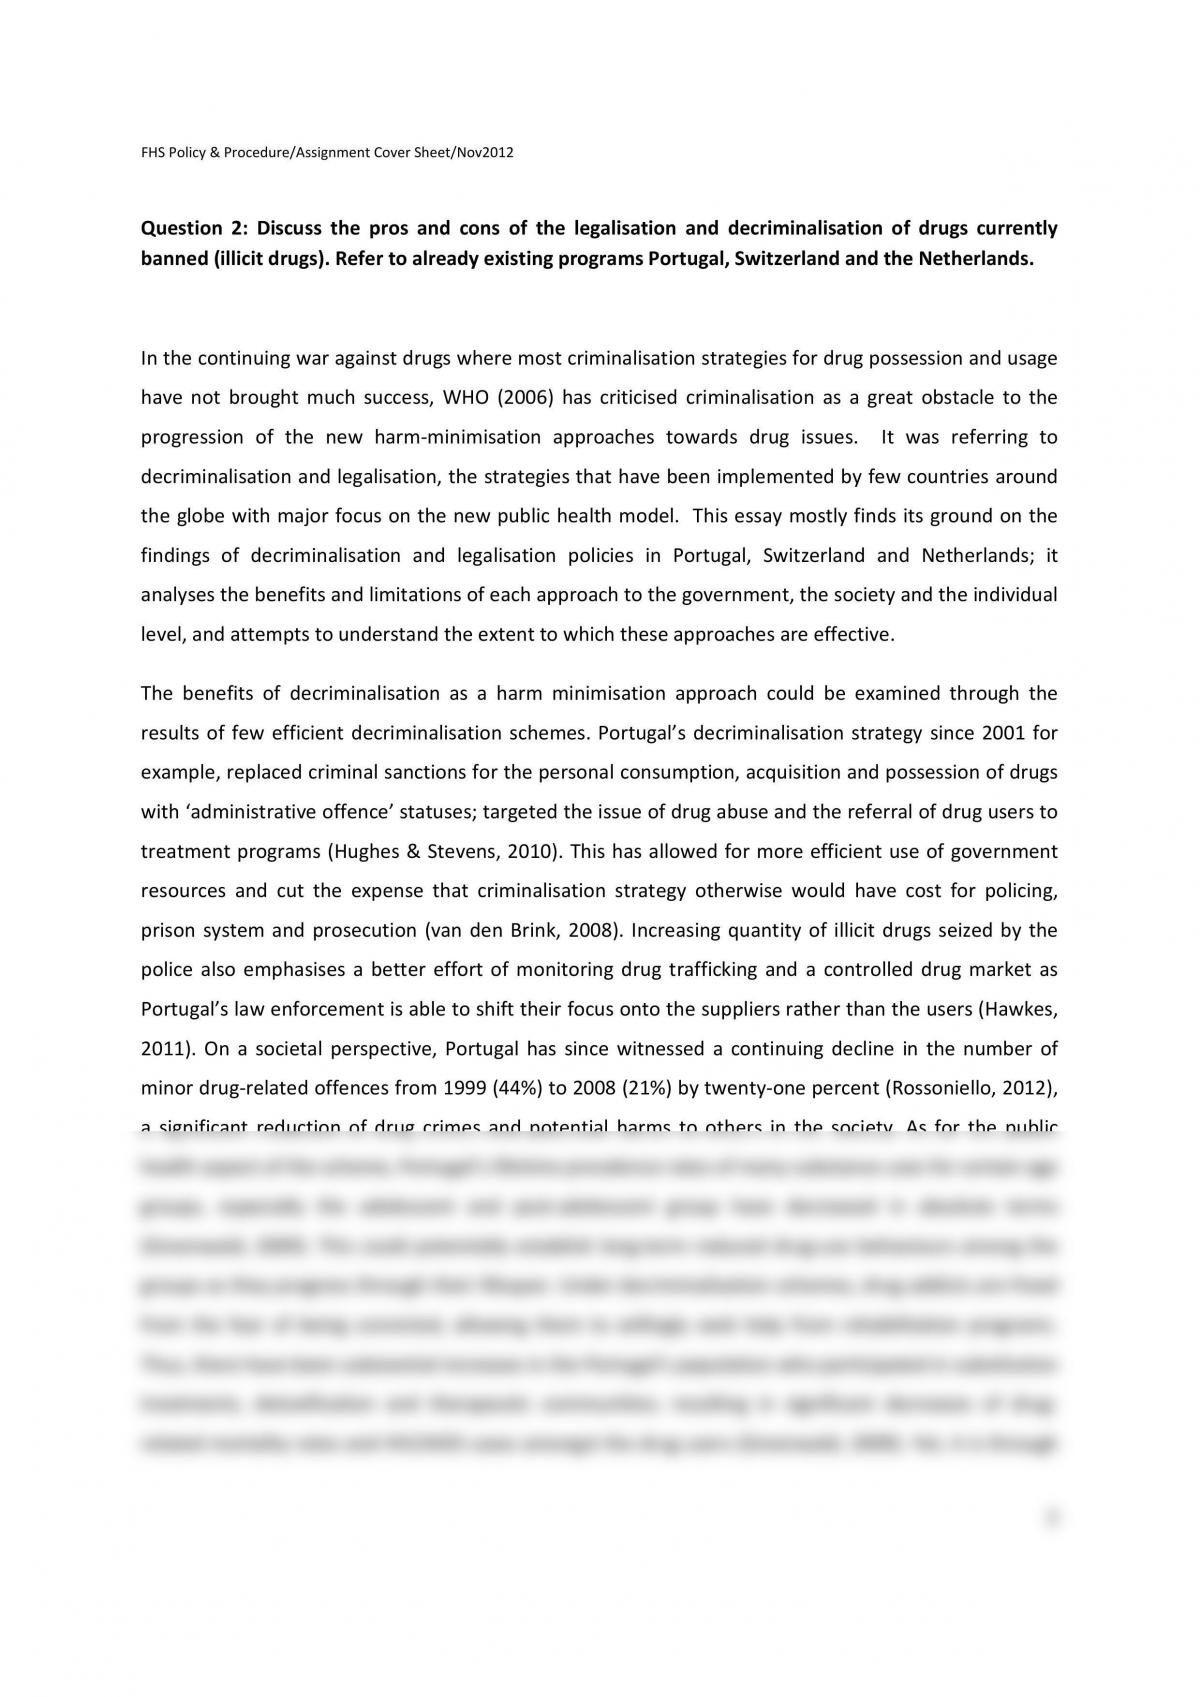 REHB3064 Essay 1 - Page 1